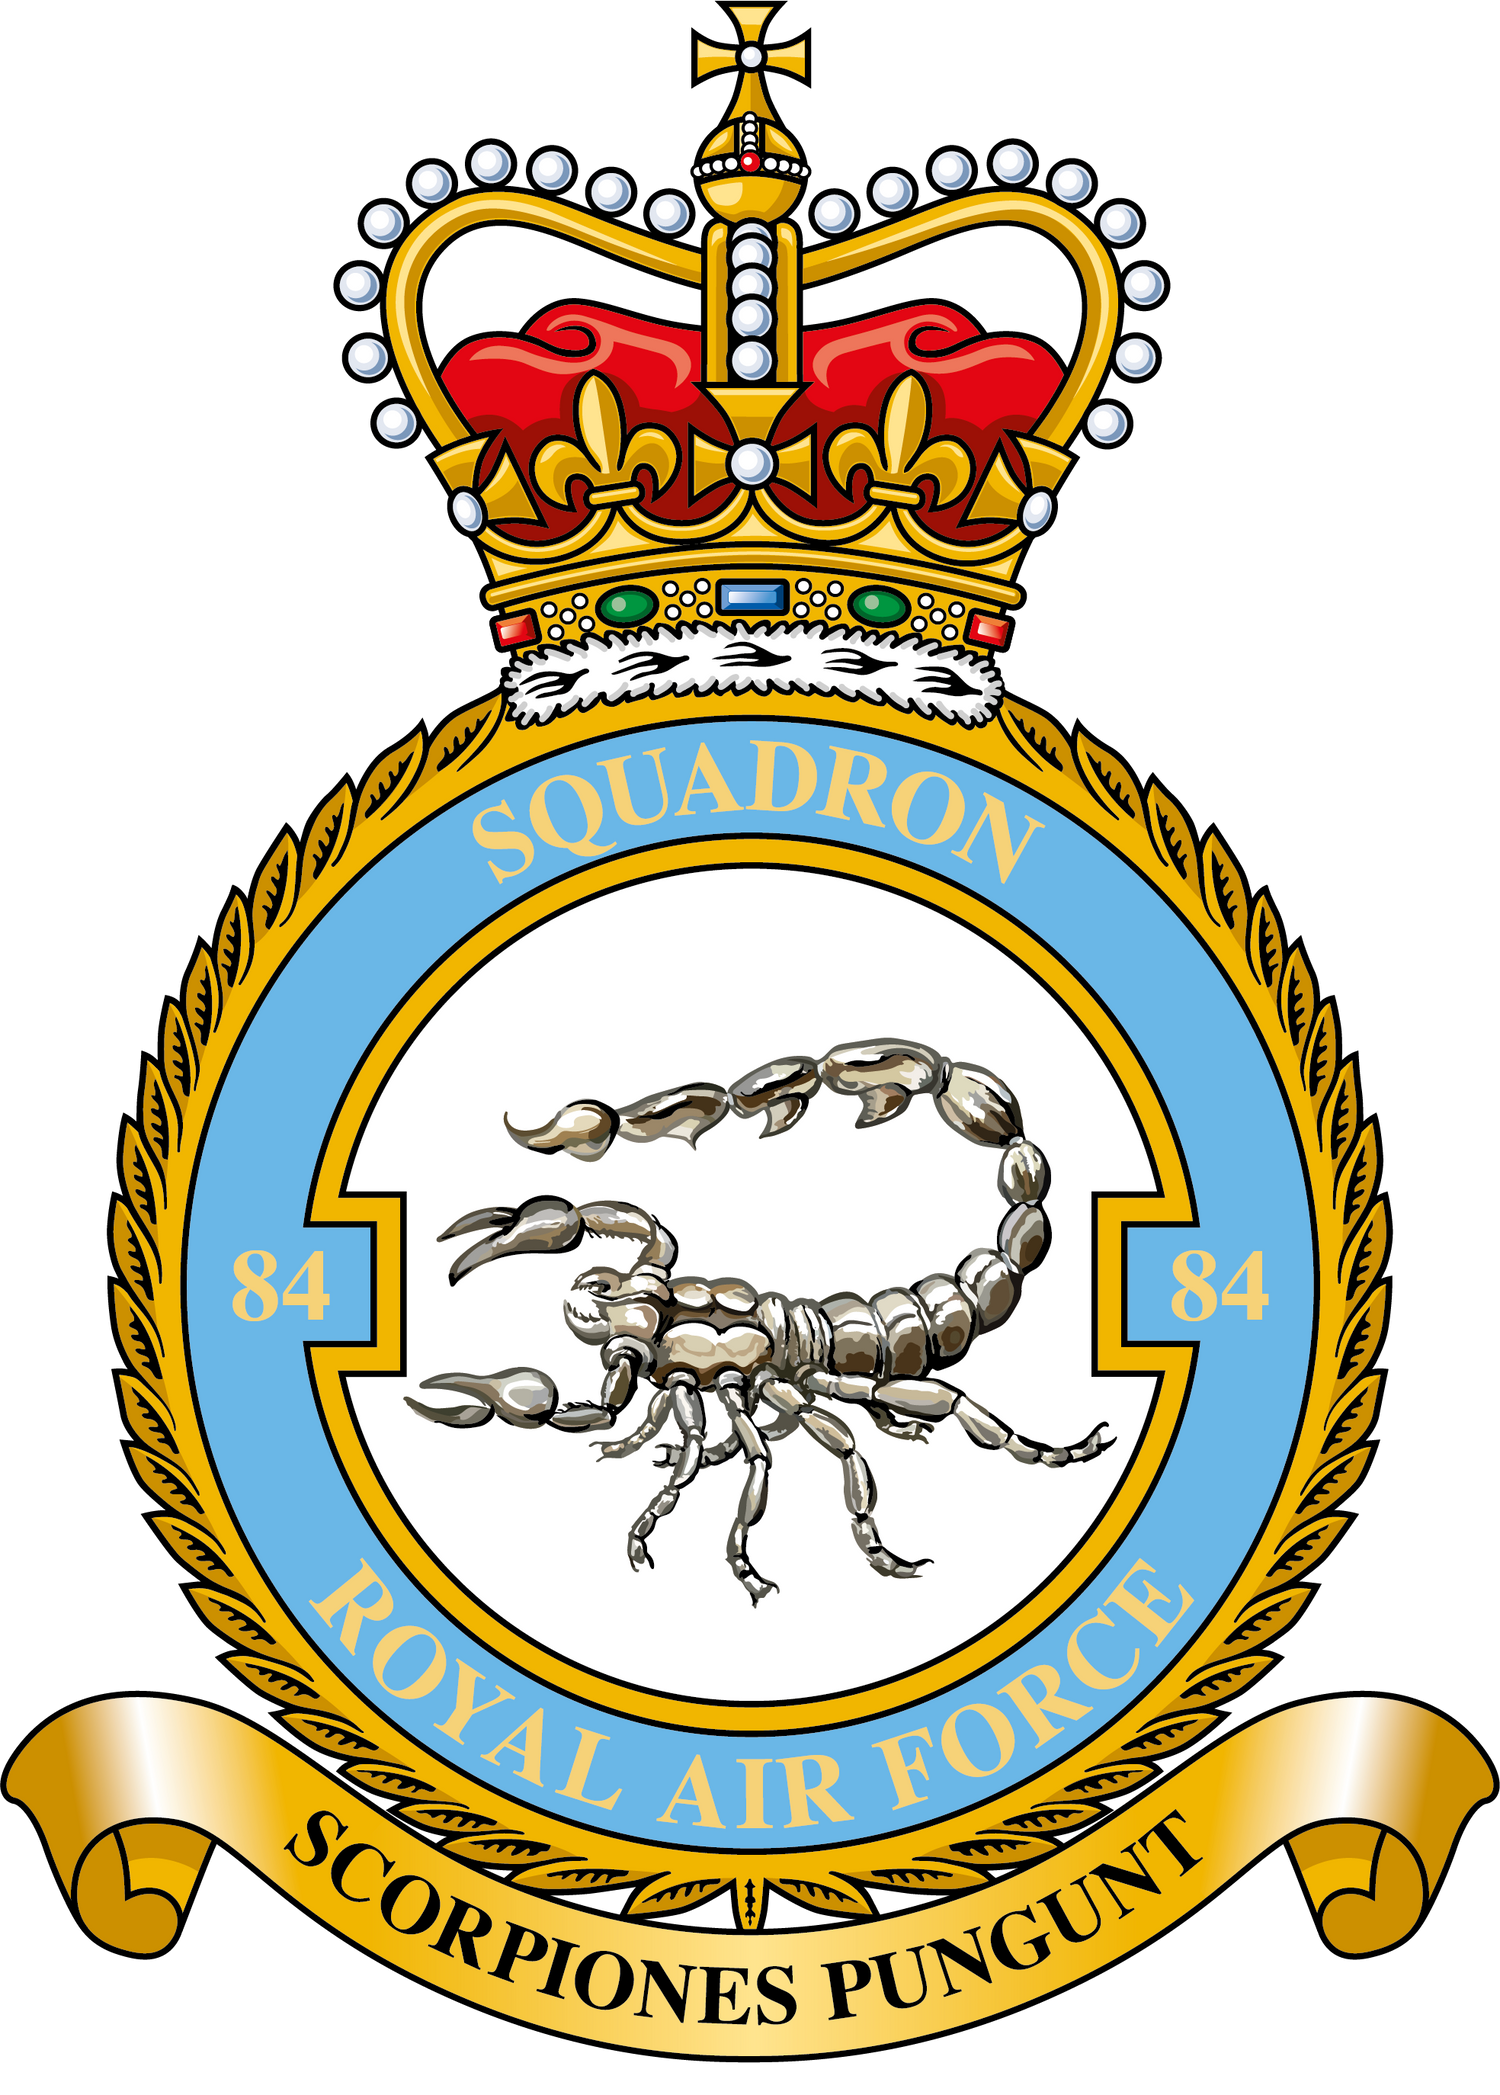 84 Squadron RAF